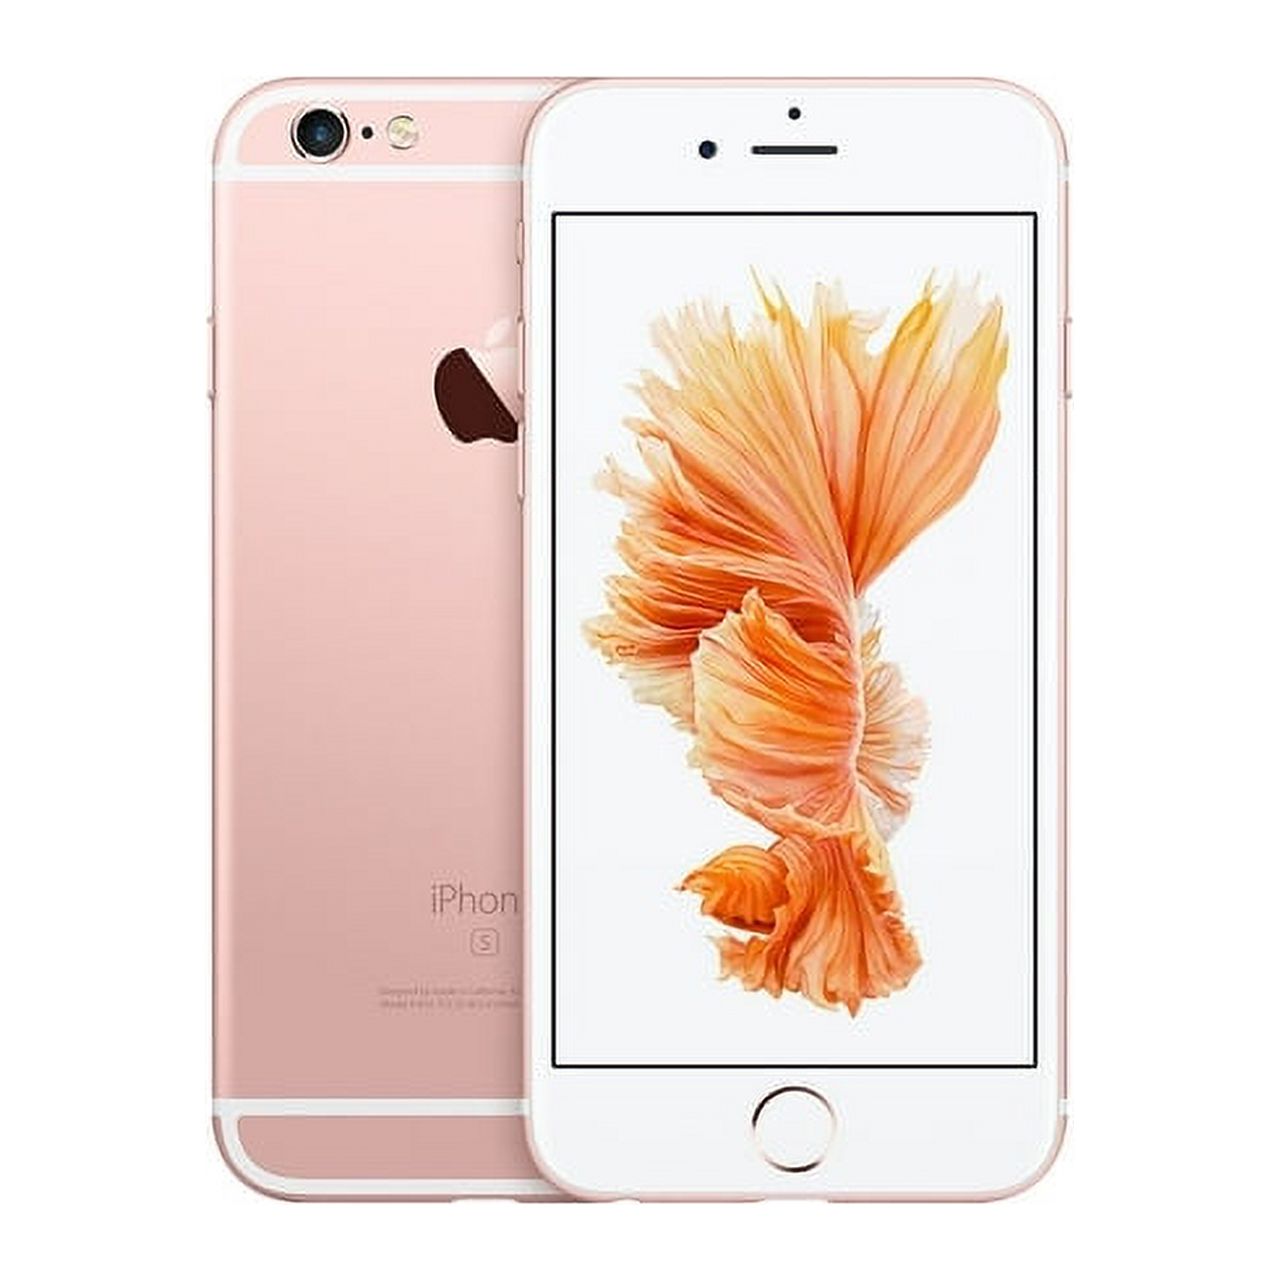 Restored Apple iPhone 6s 128GB, Rose Gold - Unlocked GSM (Refurbished) - image 1 of 3